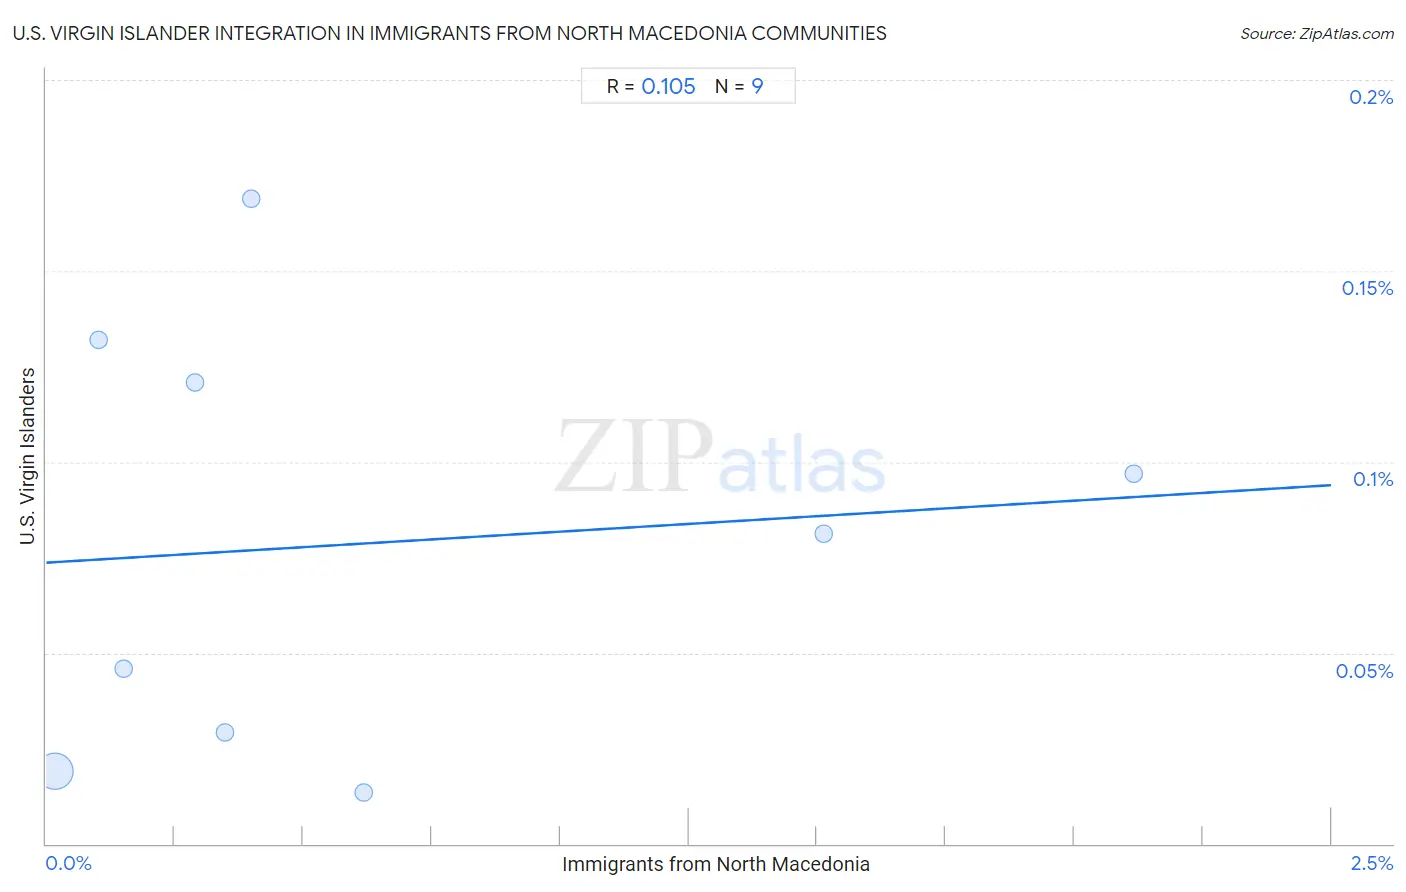 Immigrants from North Macedonia Integration in U.S. Virgin Islander Communities